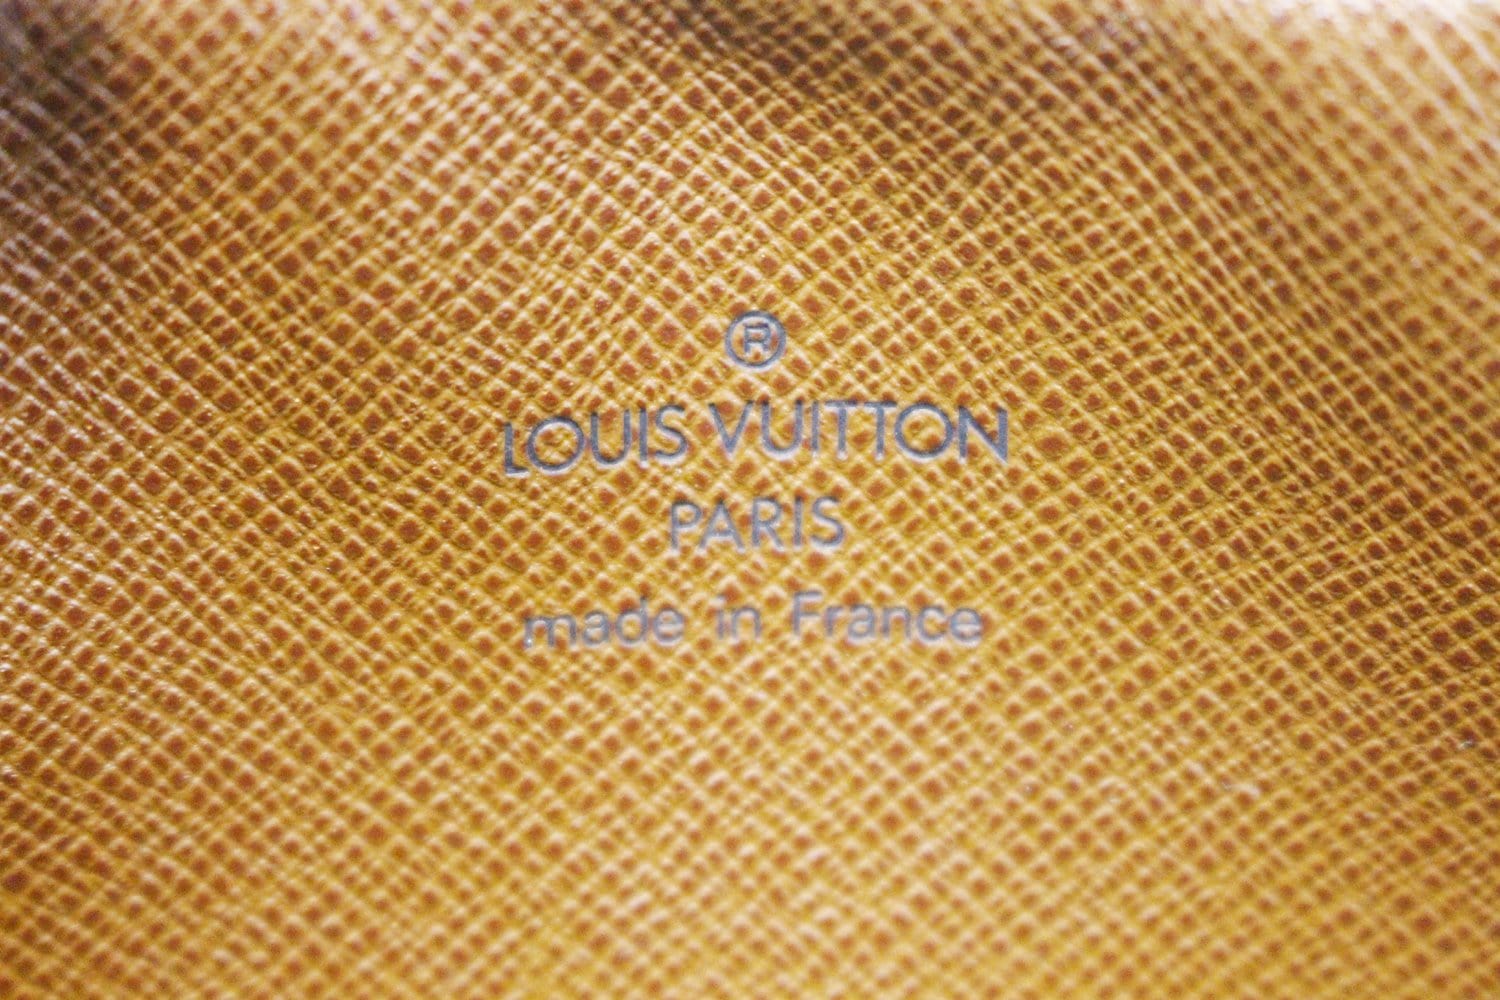 Louis Vuitton Vintage French Co Monogram Bandouliere Crossbody Bag 1222lv26